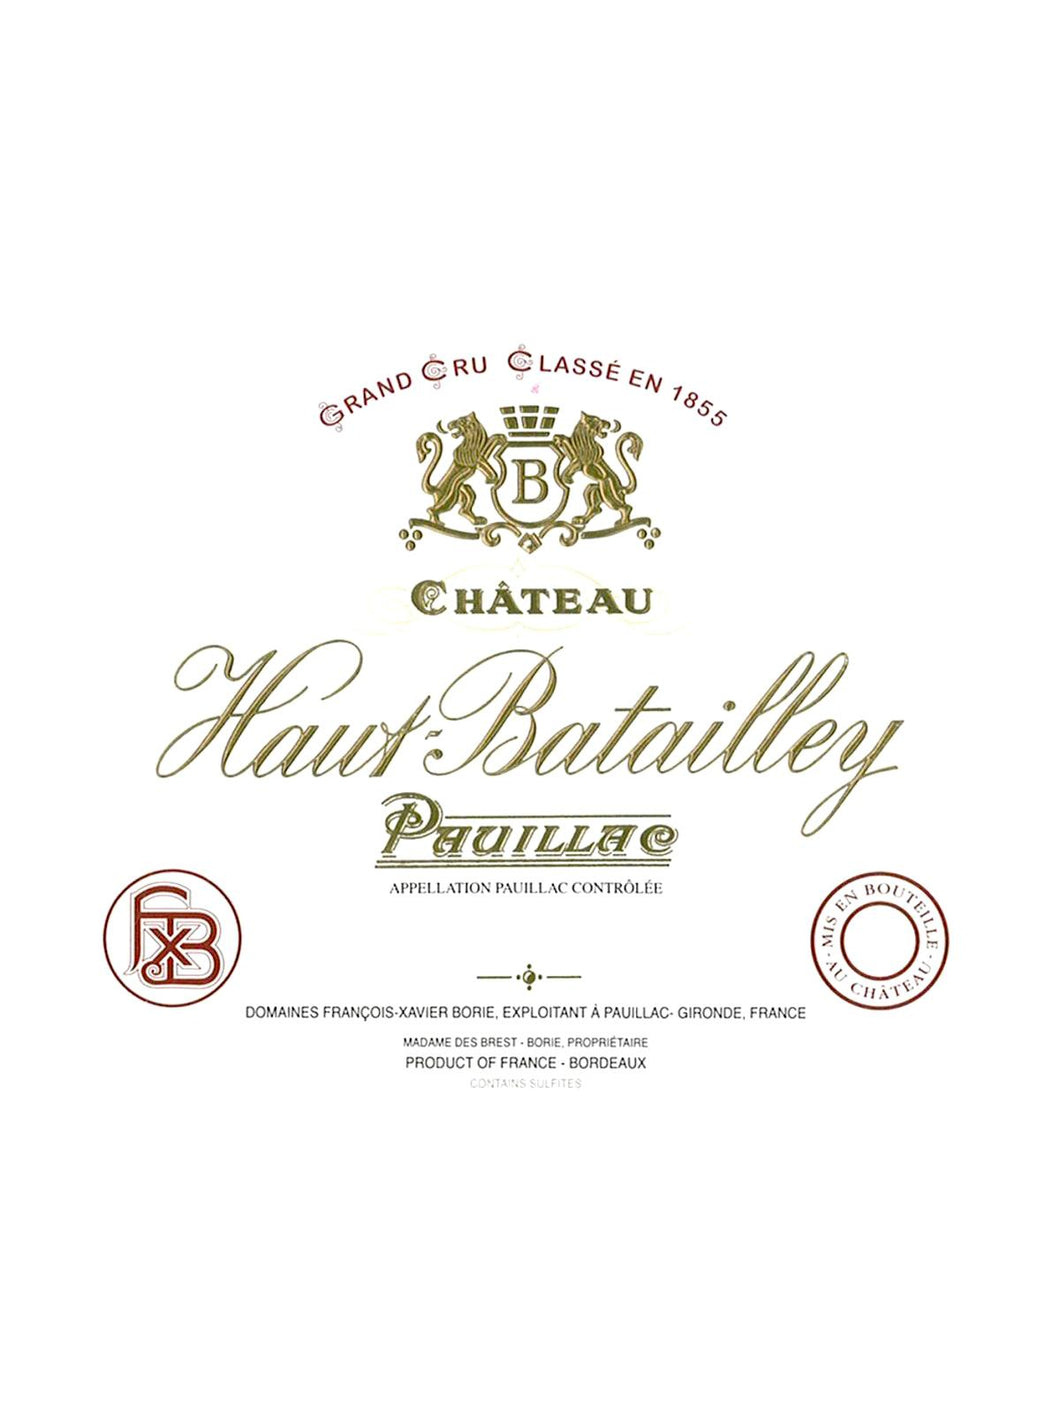 2003 Château Haut - Batailley, Pauillac Grand Cru Classé 1855